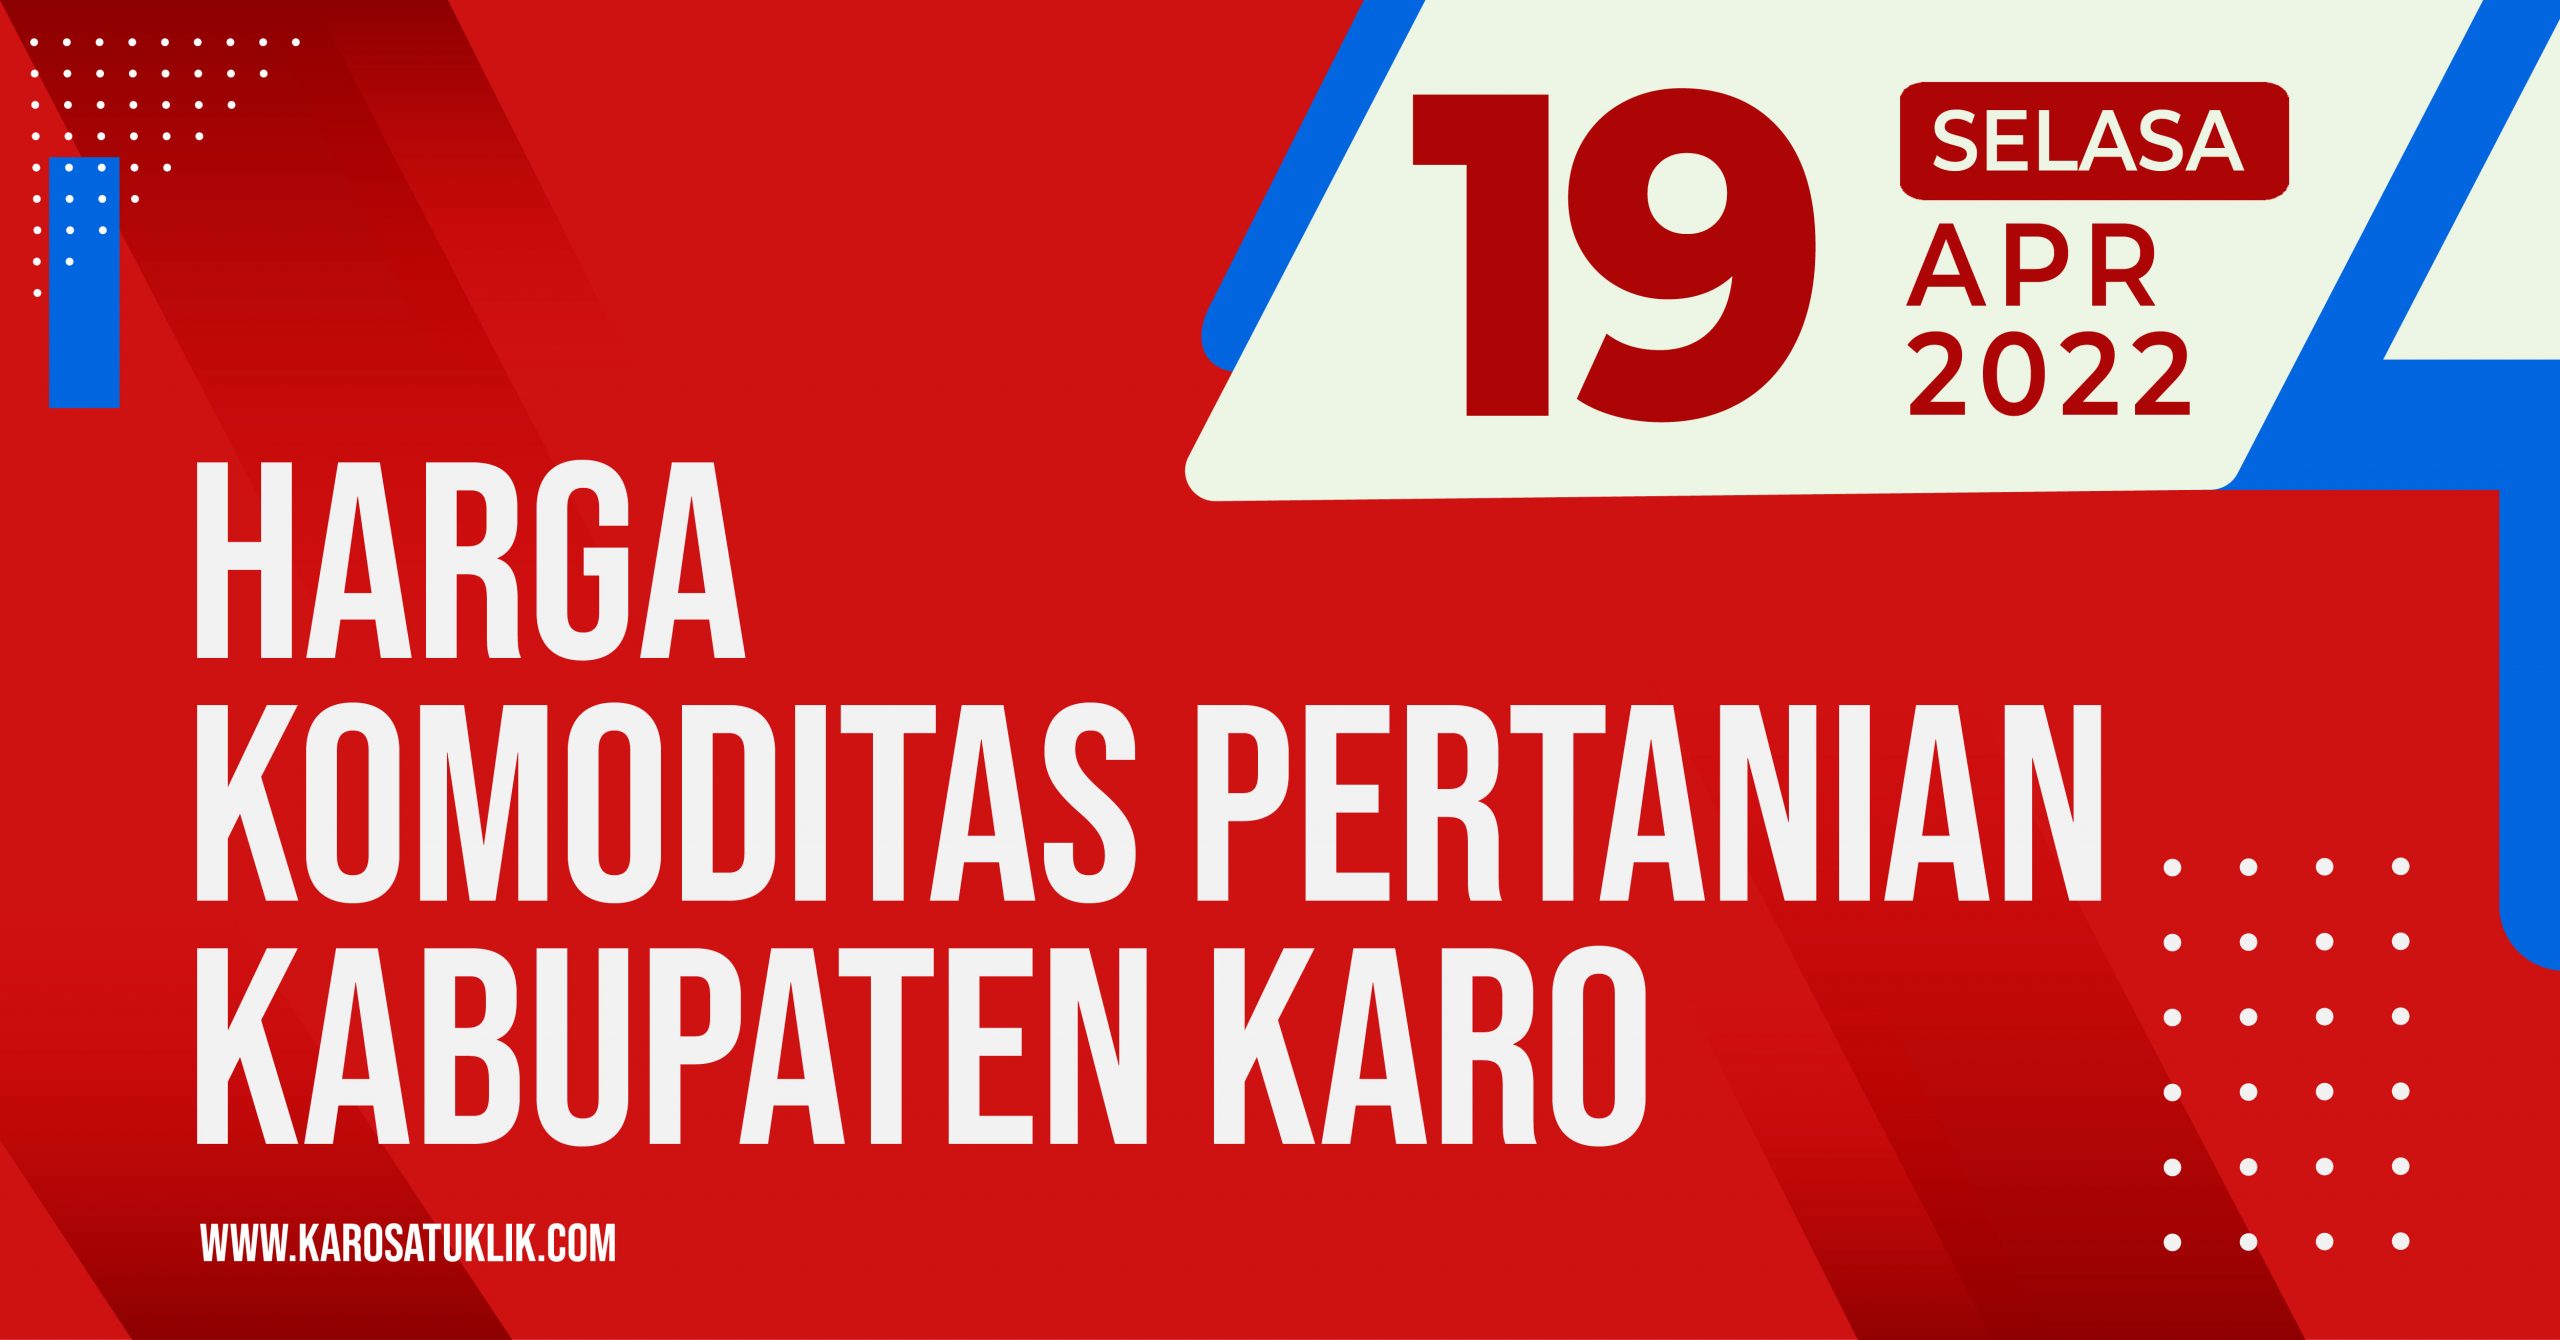 Daftar Harga Komoditas Pertanian Kabupaten Karo, Selasa 19 April 2022